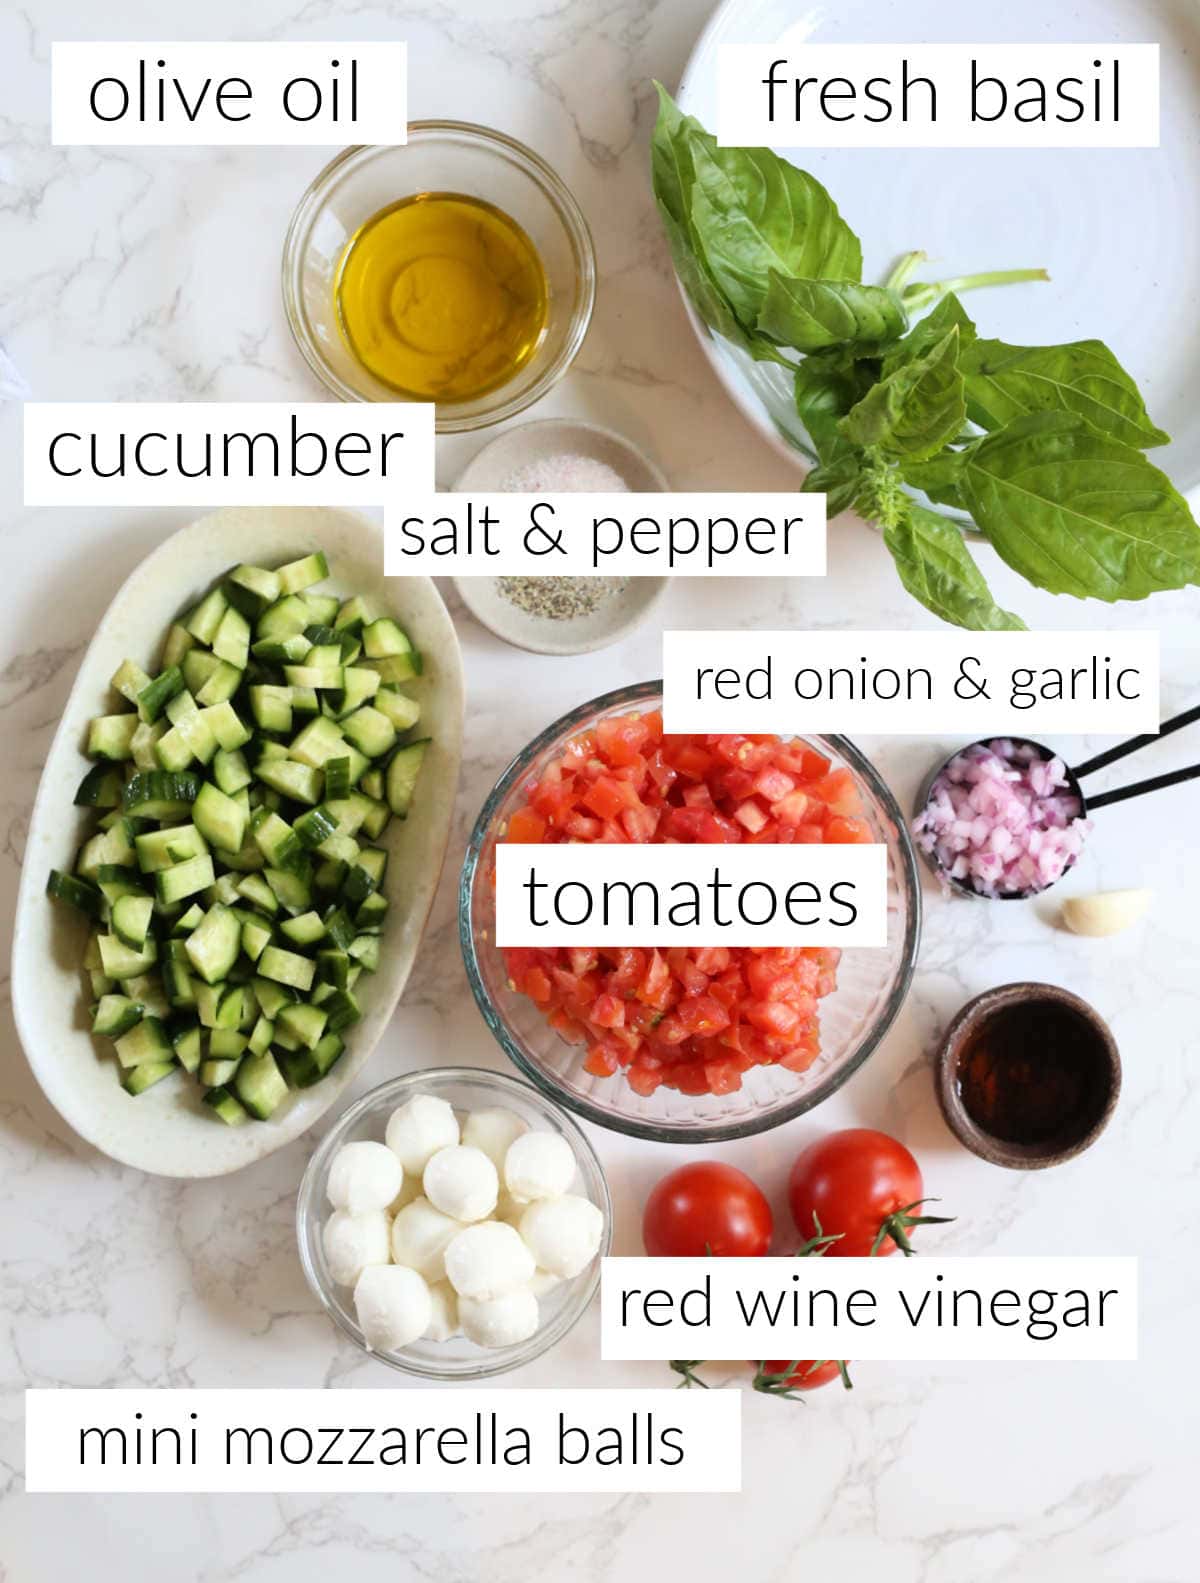 Ingredients of tomatoes, cucumber, mini mozzarella balls, garlic, onion, olive oil, red wine vinegar, salt, pepper, and basil leaves.